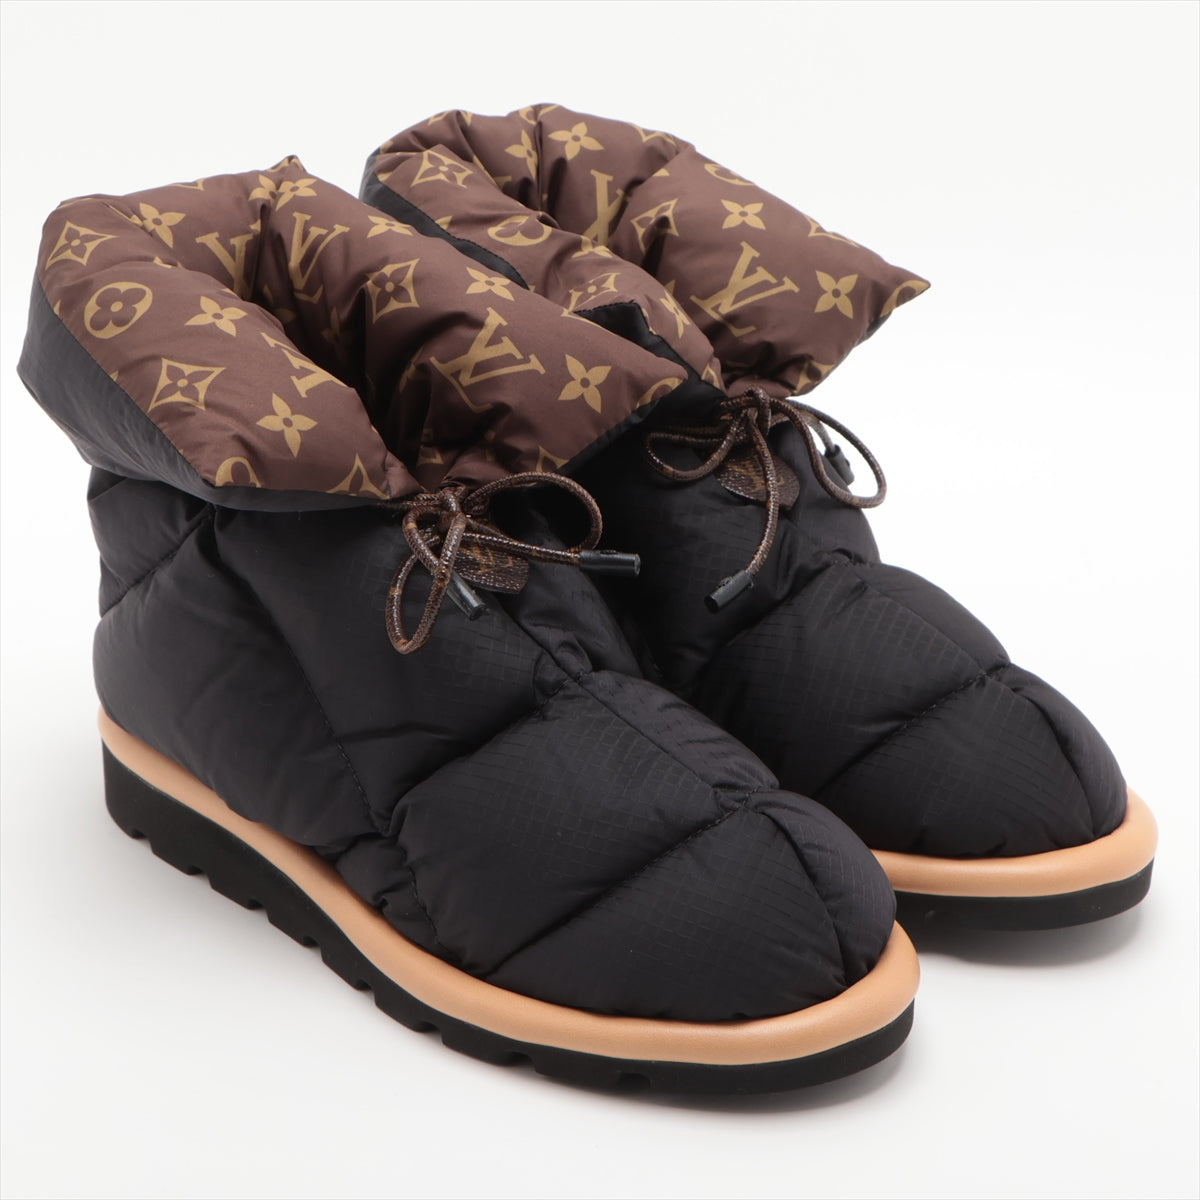 Louis Vuitton pillow line 21 years Nylon & Leather Short Boots 38 Ladies' Black × Brown SC0211 Monogram